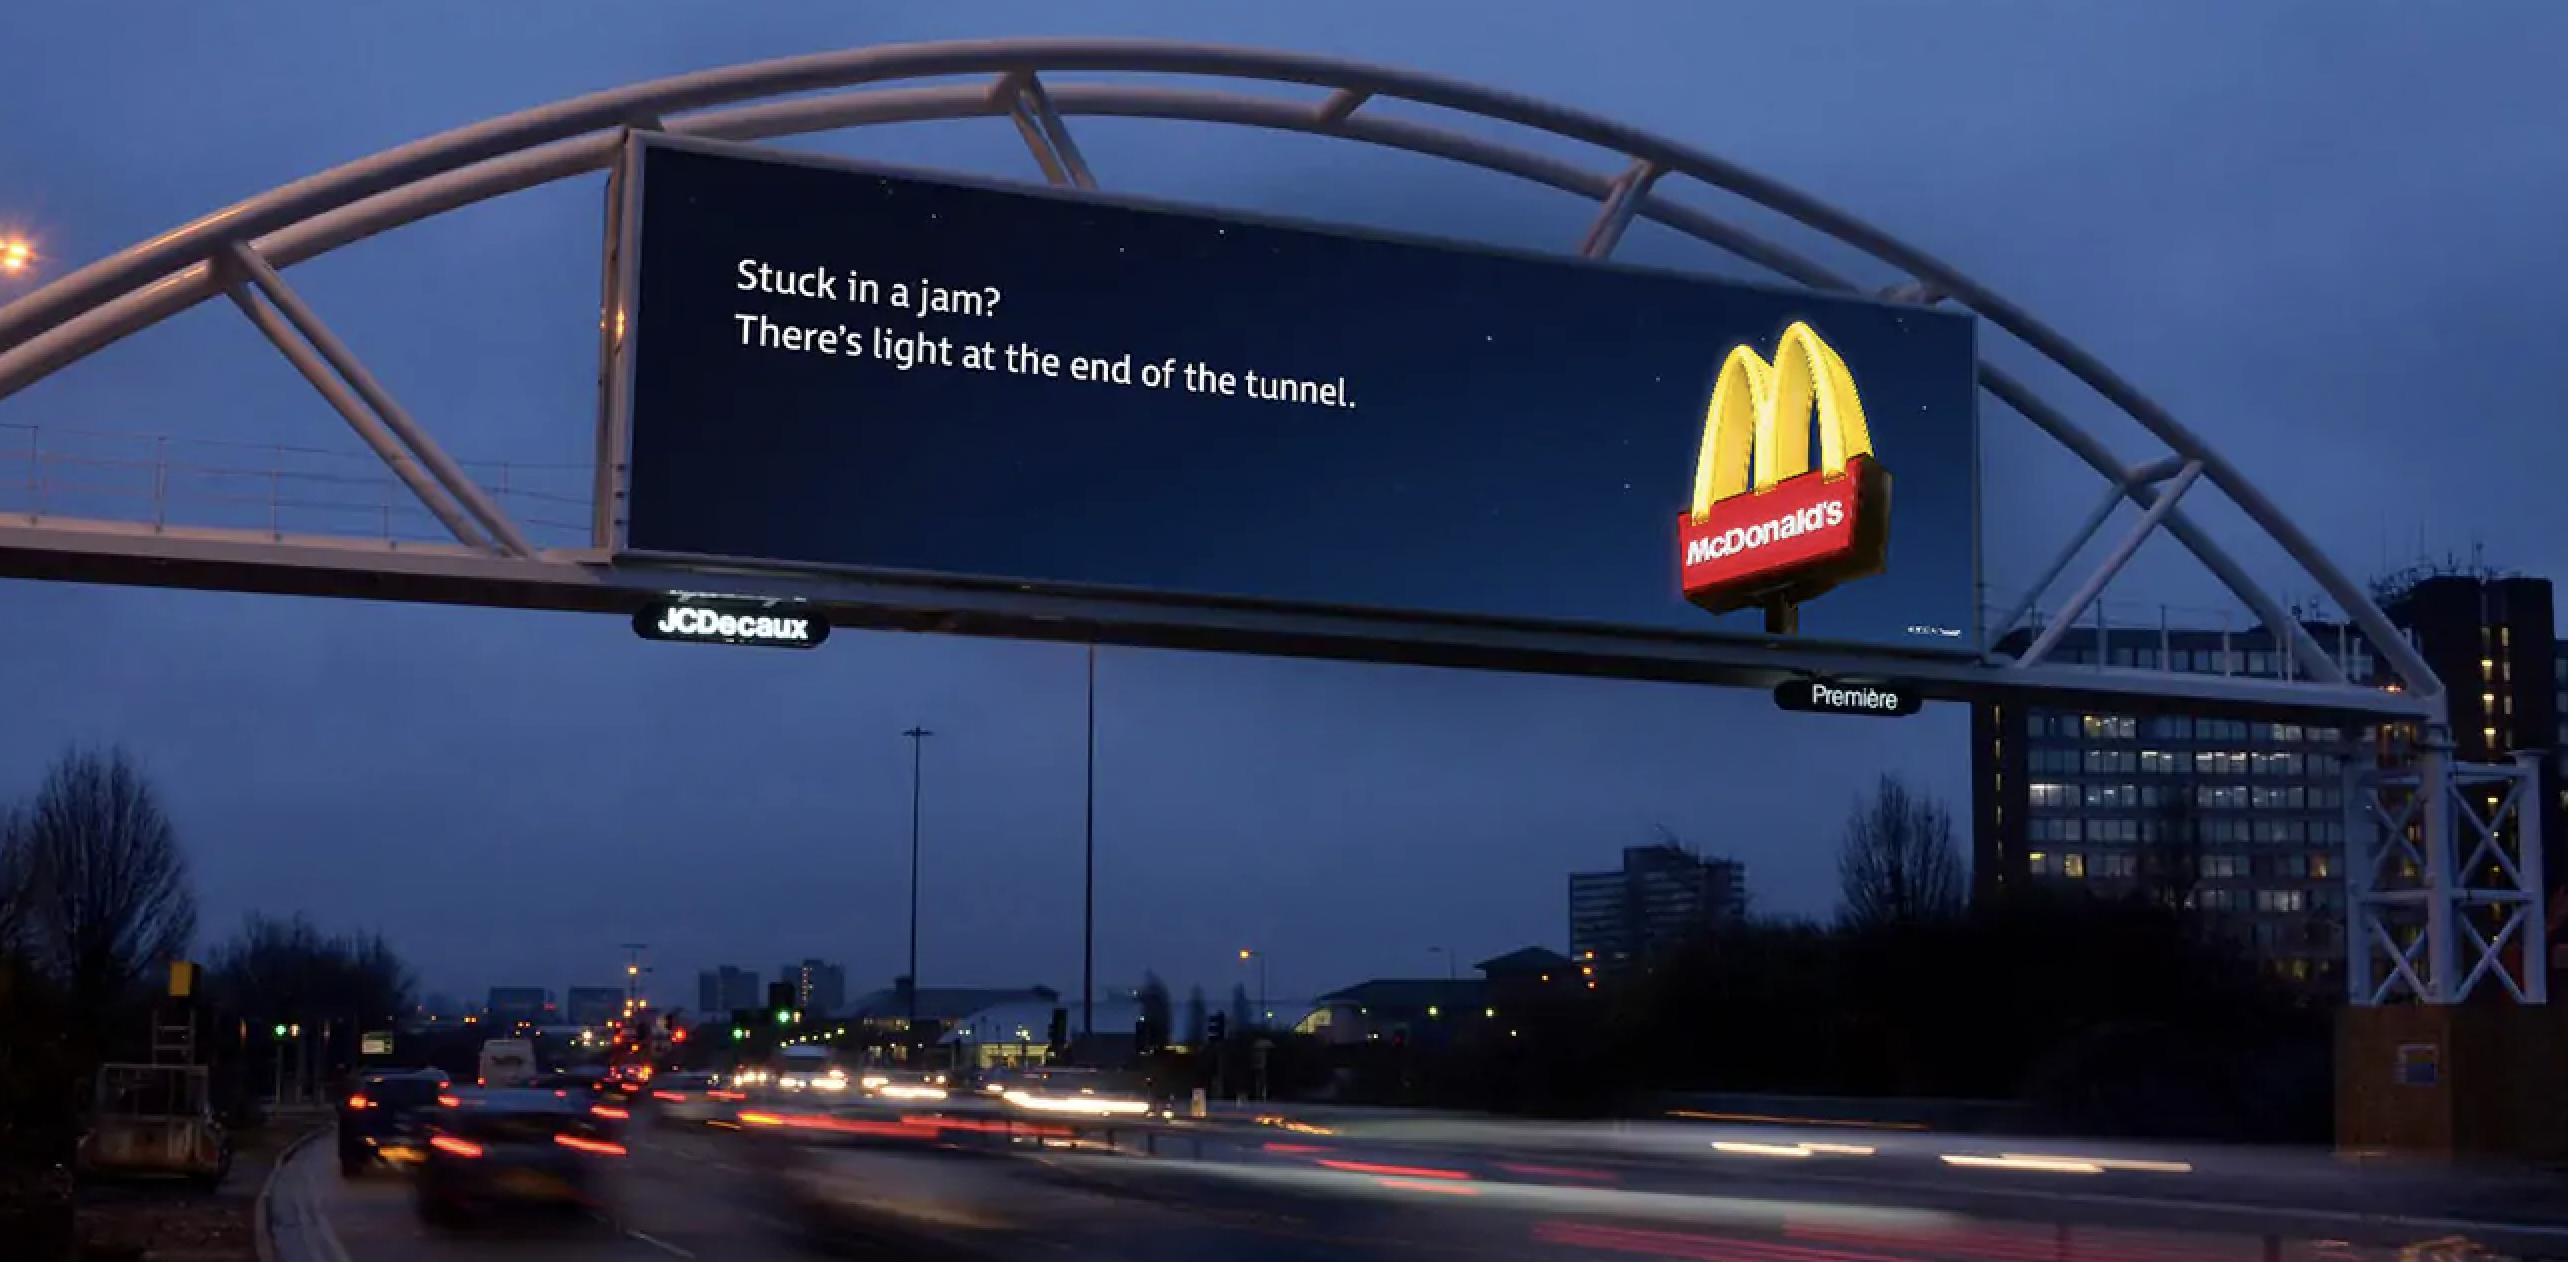 mcdonalds billboard as a restaurant advertisement example